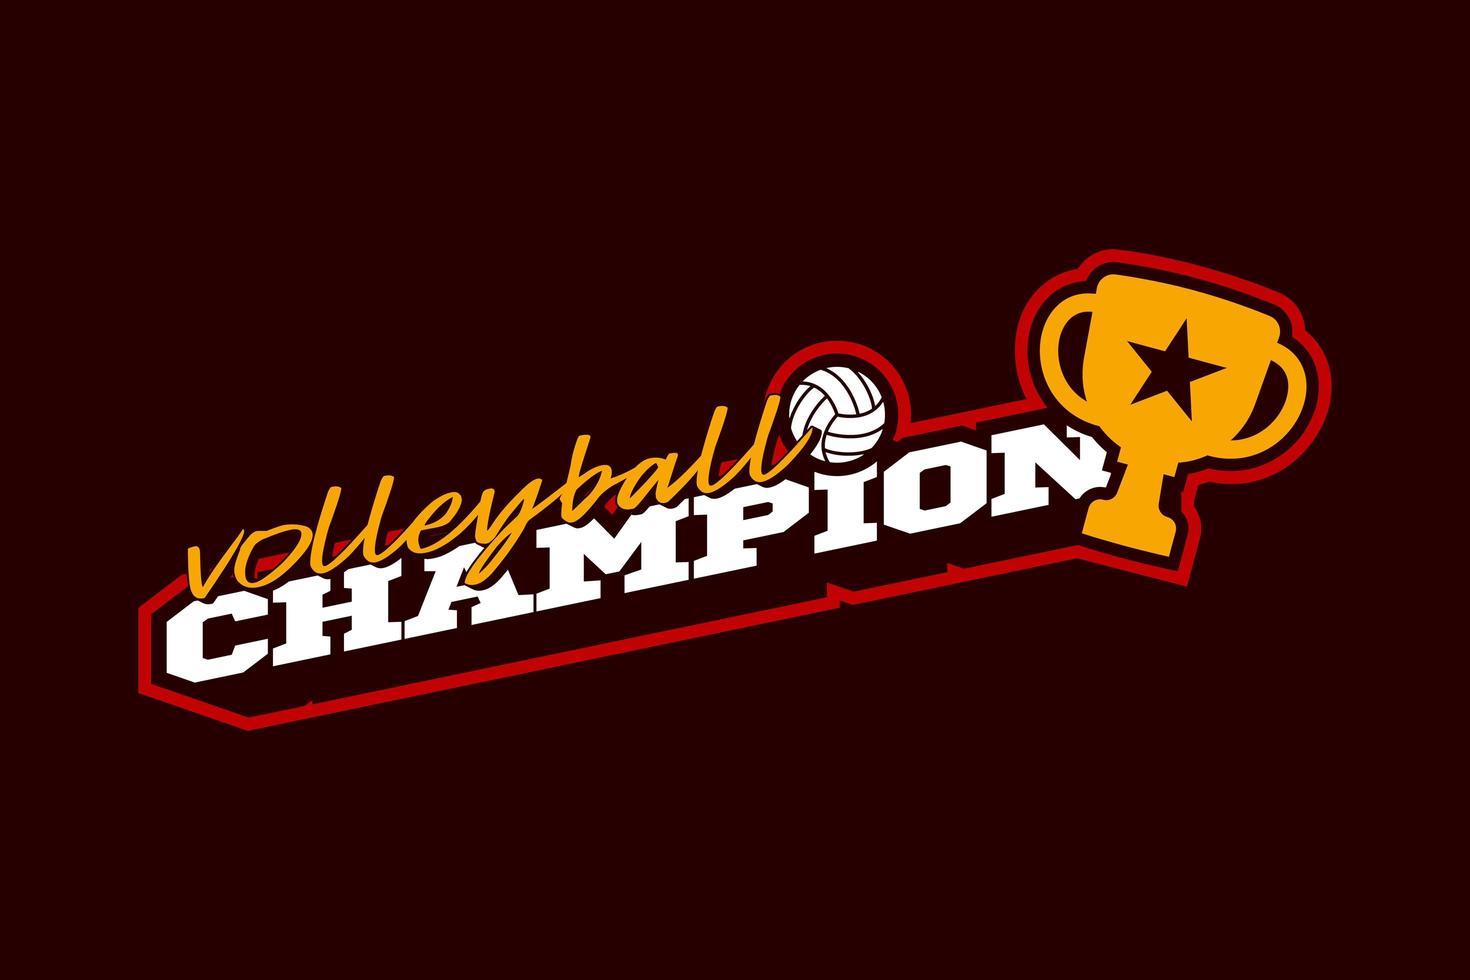 Champion volleyball vector logo